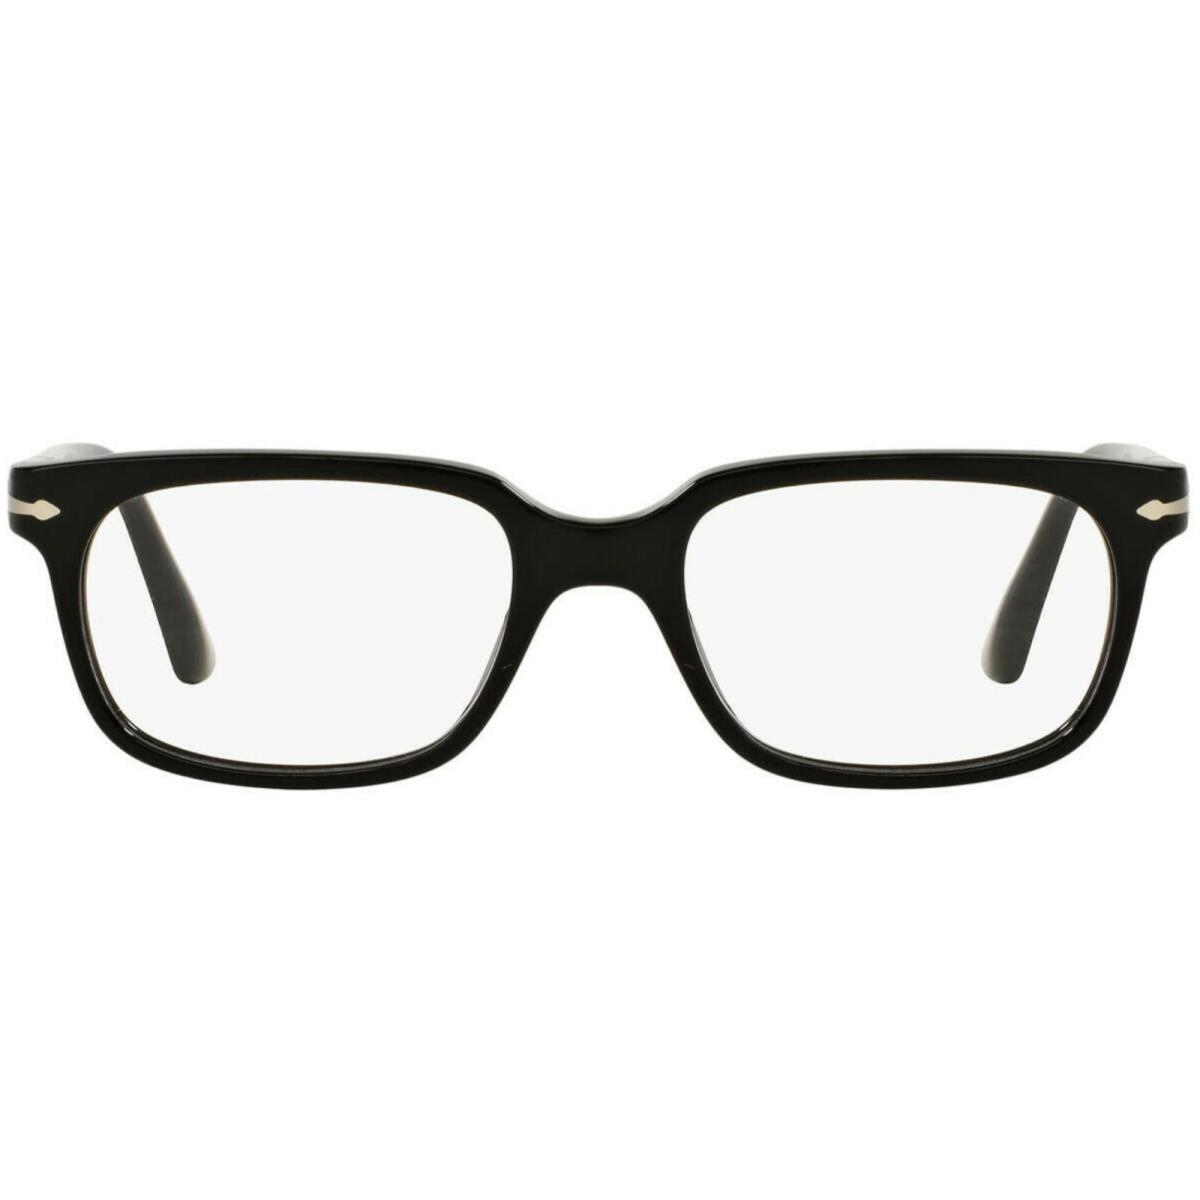 Persol Rx-able Eyeglasses 3131-V 95 52-16 145 Shiny Black Rectangular Frames